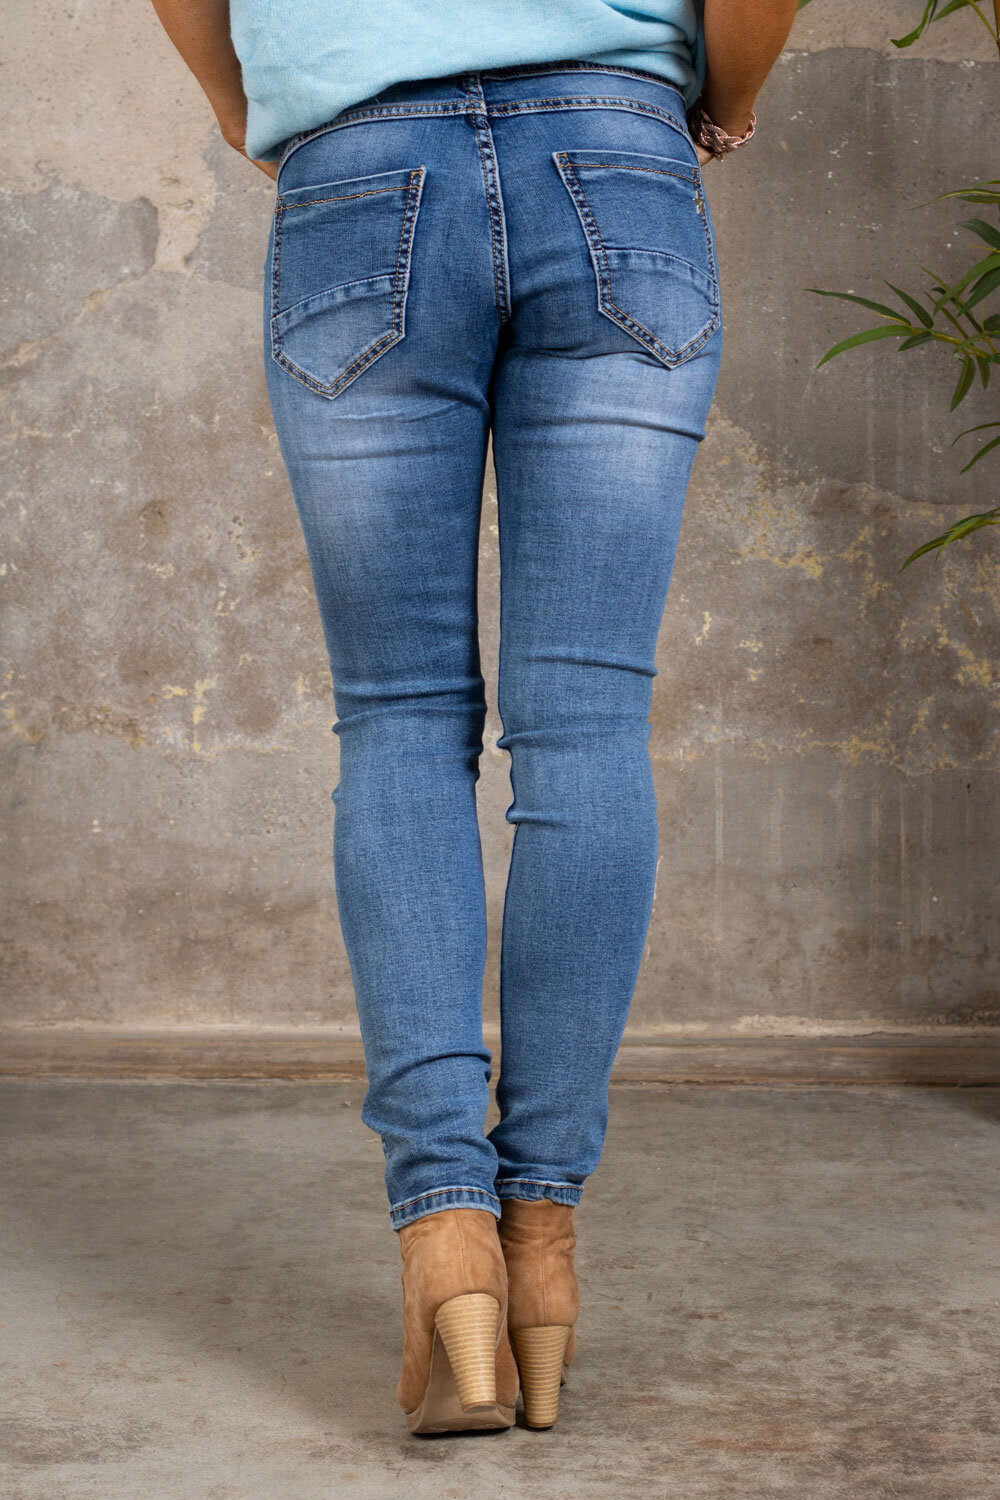 Jeans JW1507 - Nitar - Ljustvätt